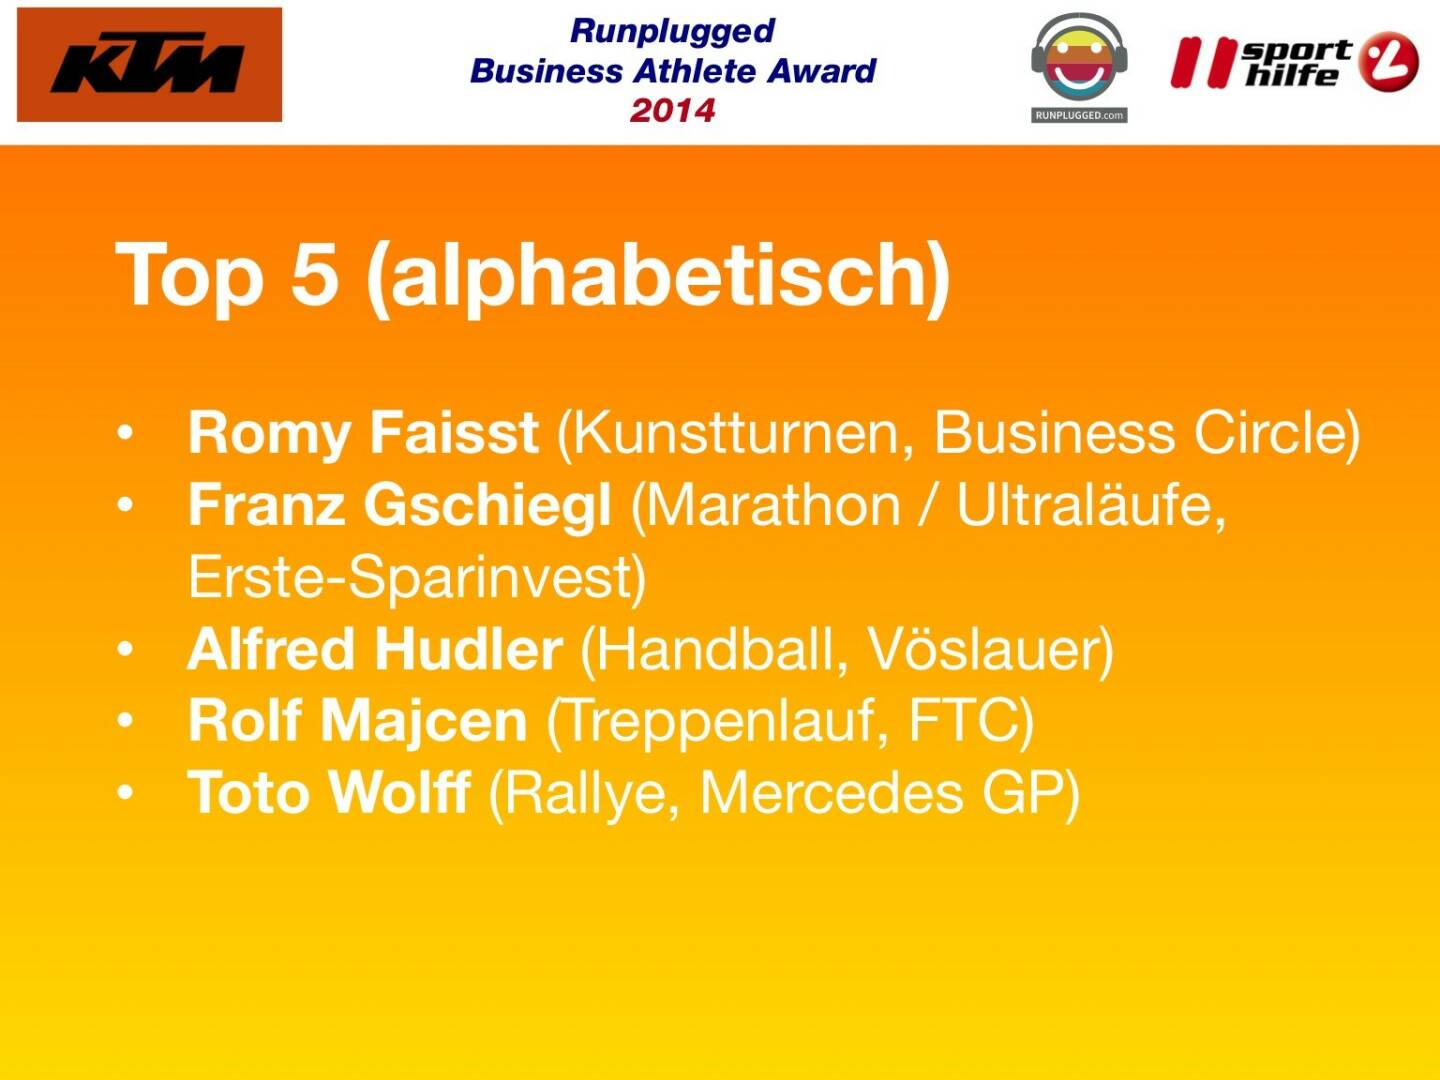 Top 5 (alphabetisch): Romy Faisst (Kunstturnen, Business Circle), Franz Gschiegl (Marathon / Ultraläufe, Erste-Sparinvest), Alfred Hudler (Handball, Vöslauer), Rolf Majcen (Treppenlauf, FTC), Toto Wolff (Rallye, Mercedes GP)